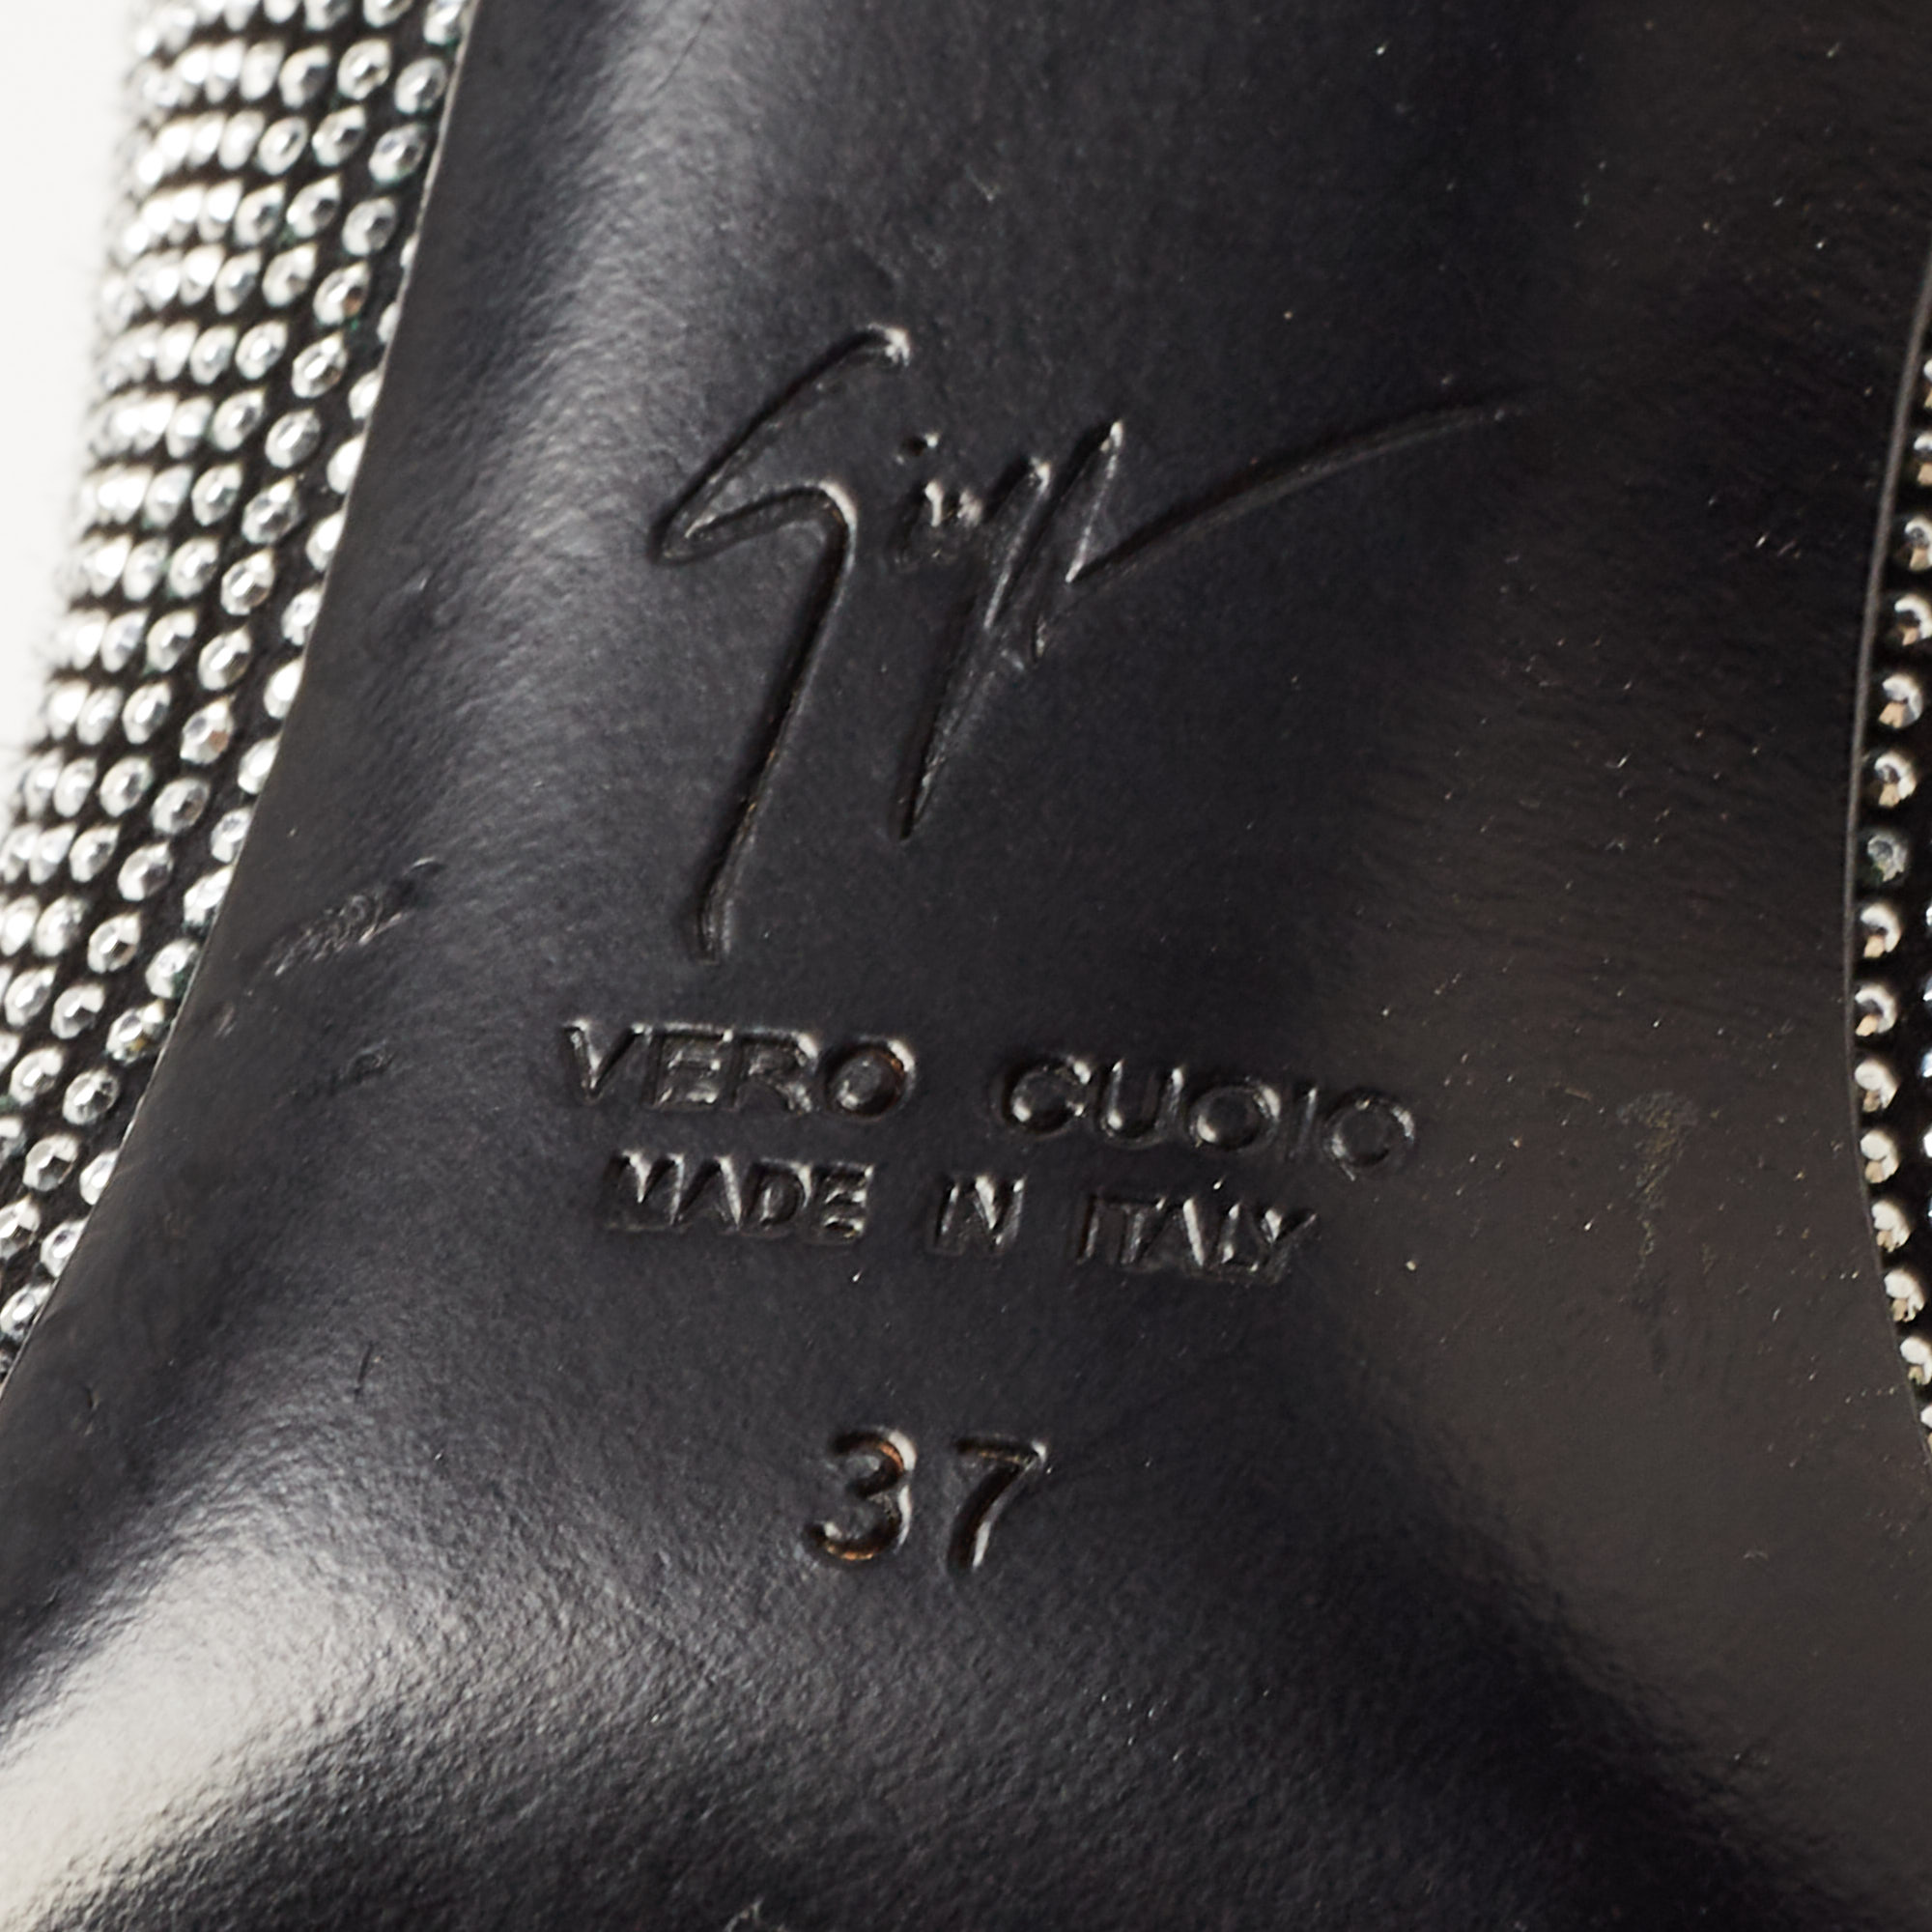 Giuseppe Zanotti Black Suede Crystal Embellished Pointed Toe Pumps Size 37